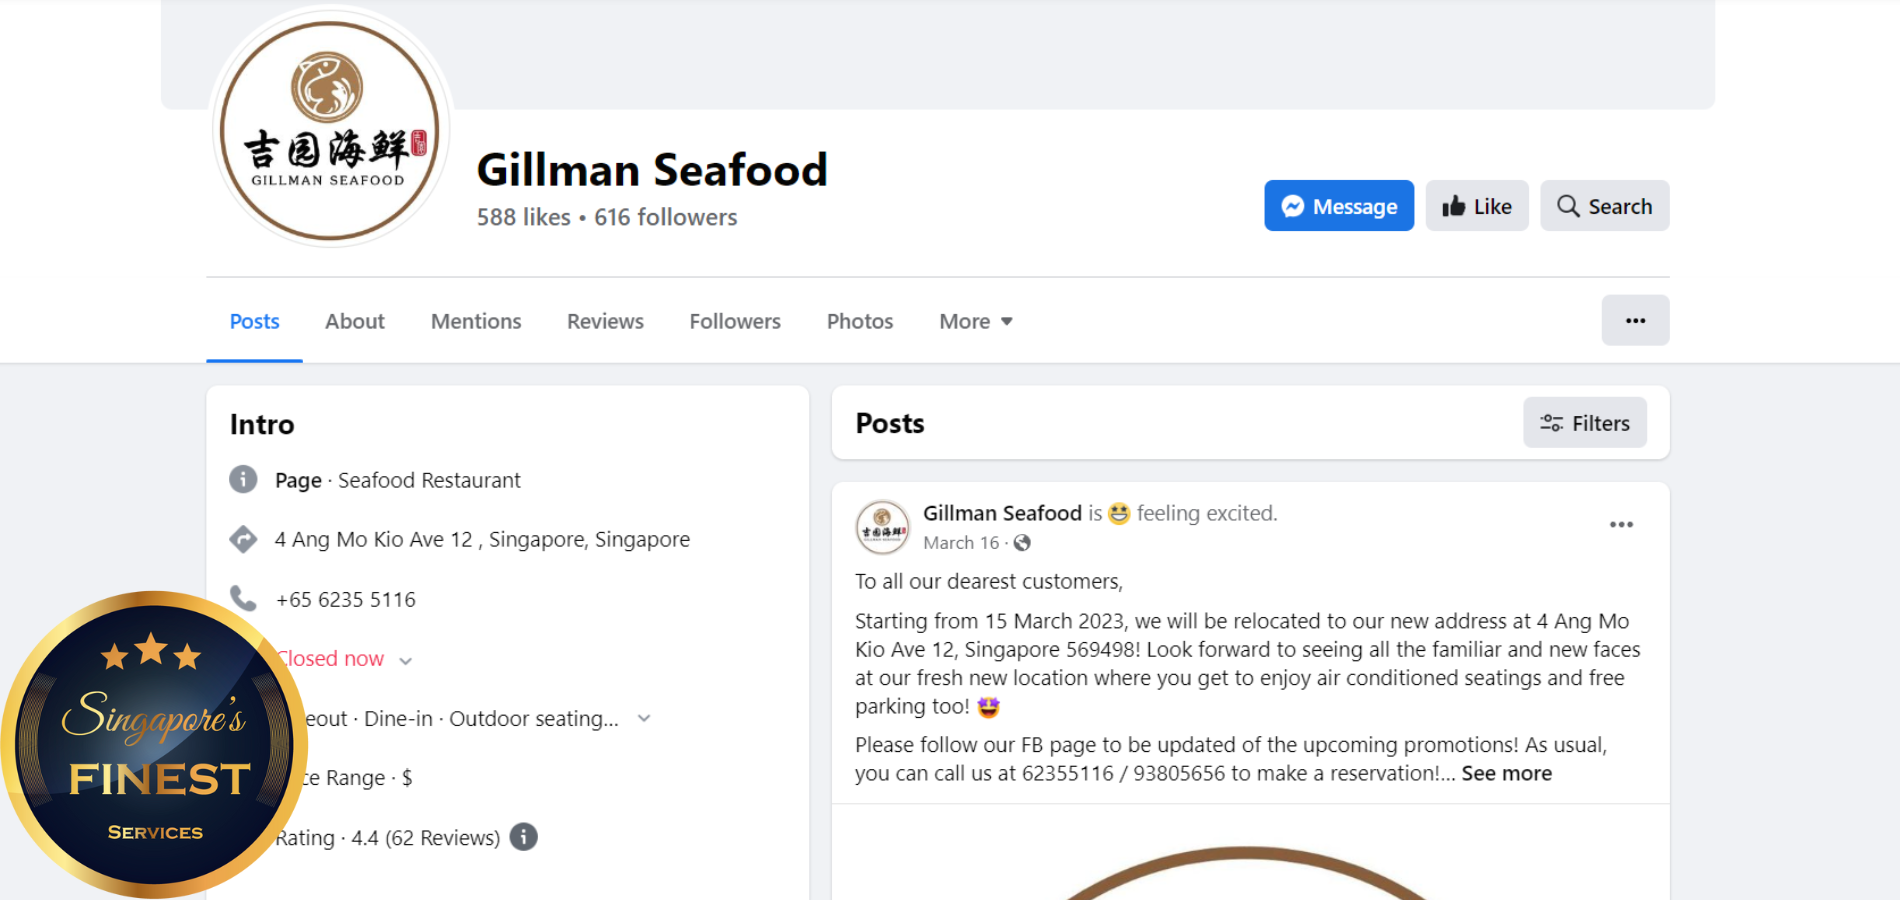 The Finest Gillman Barracks Food in Singapore